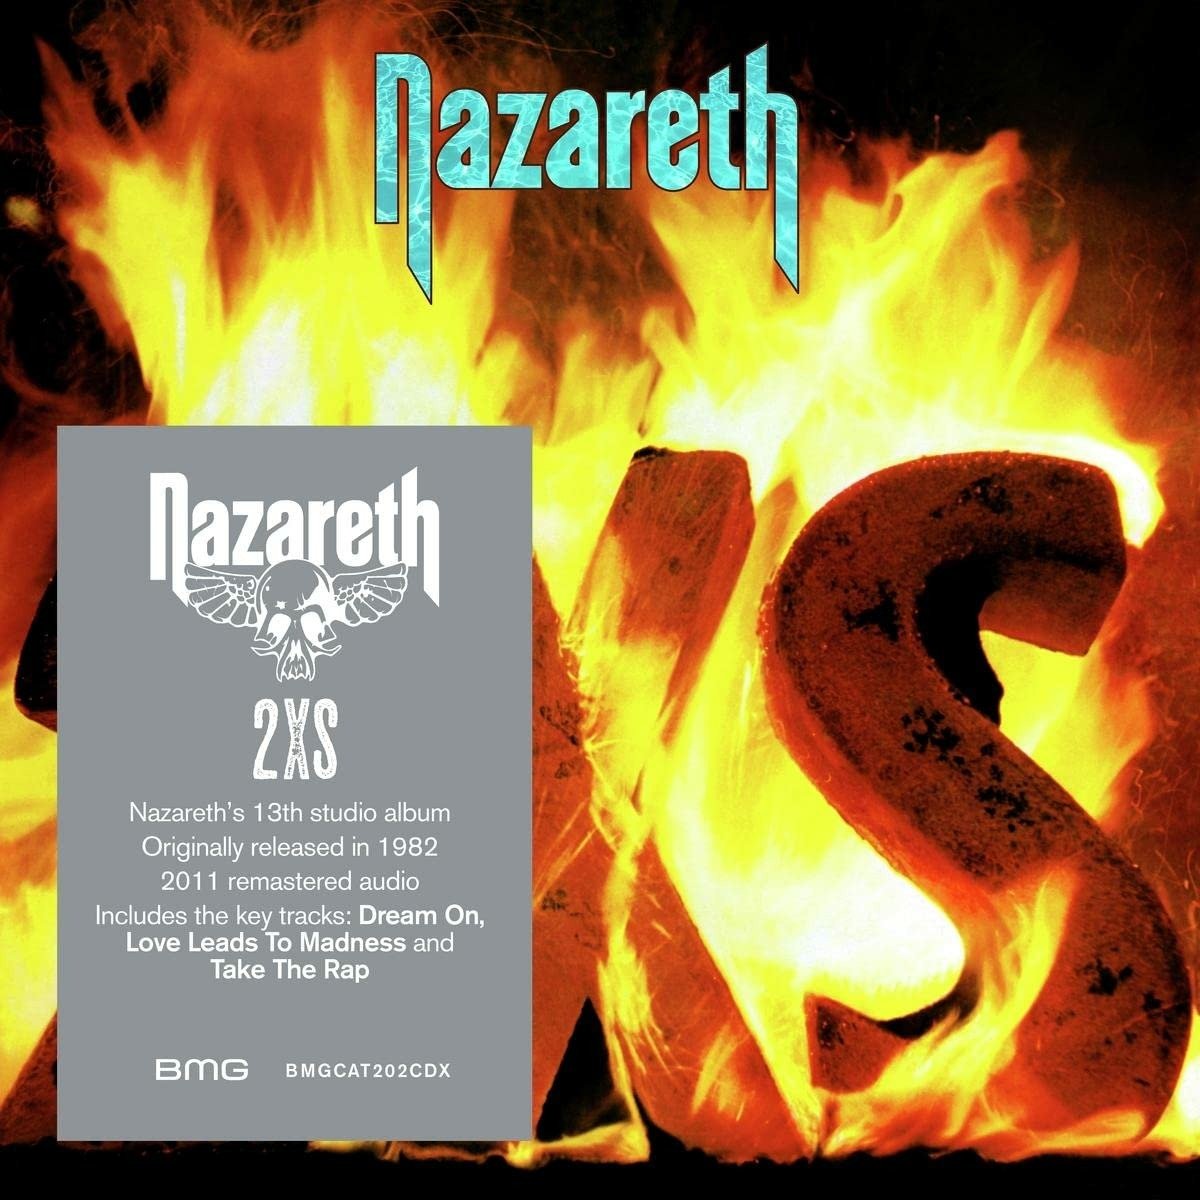 NAZARETH, 2XS, CD